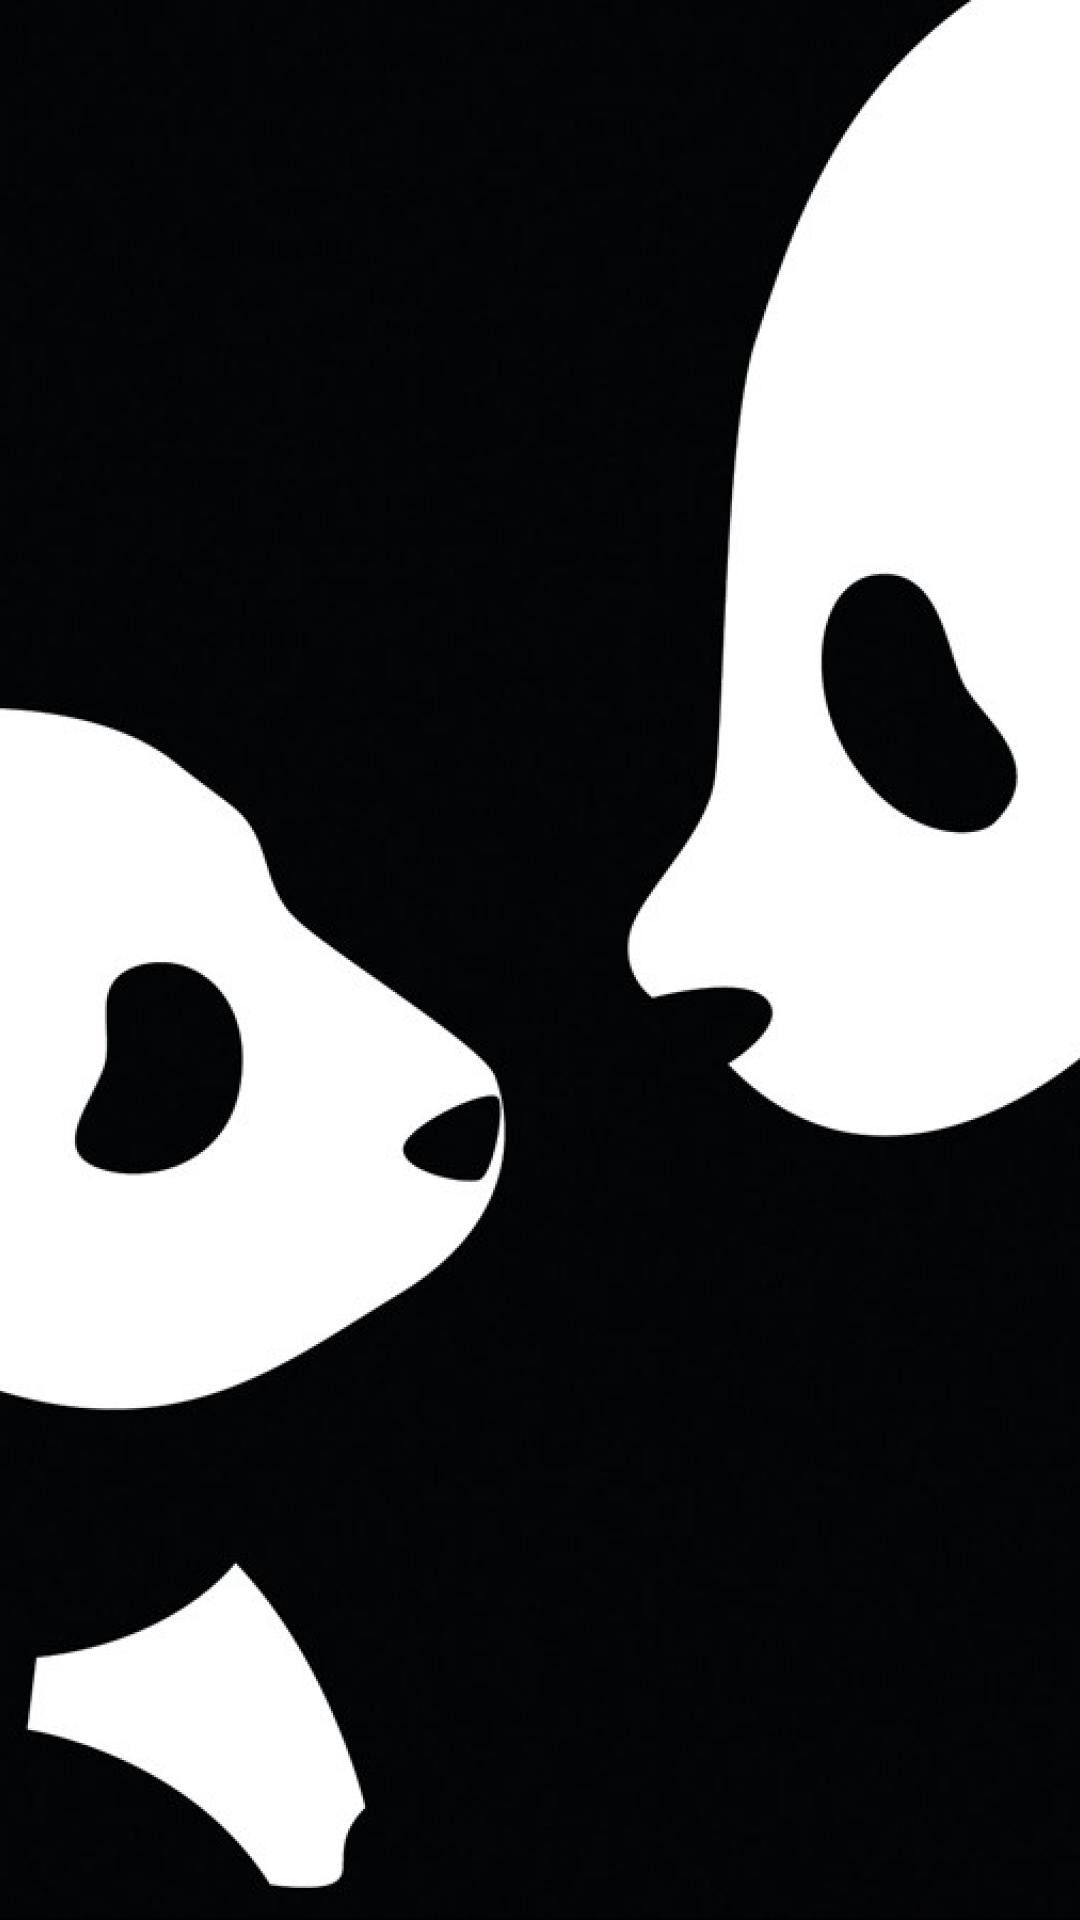 Black and White Panda iPhone Wallpaper resolution 1080x1920